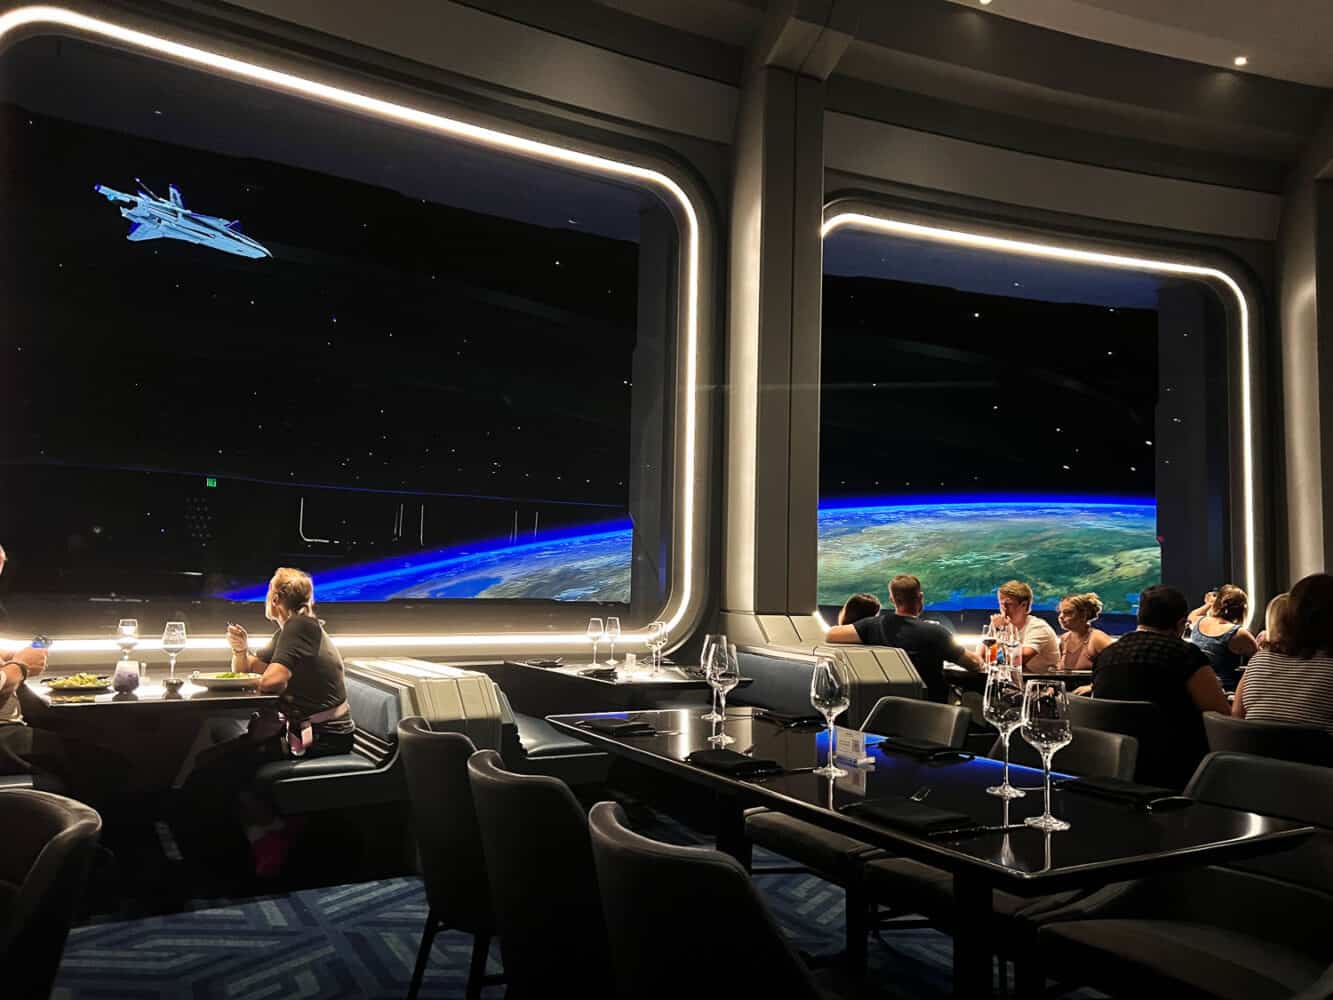 Space 220 restaurant, Epcot, Disney World, Orlando